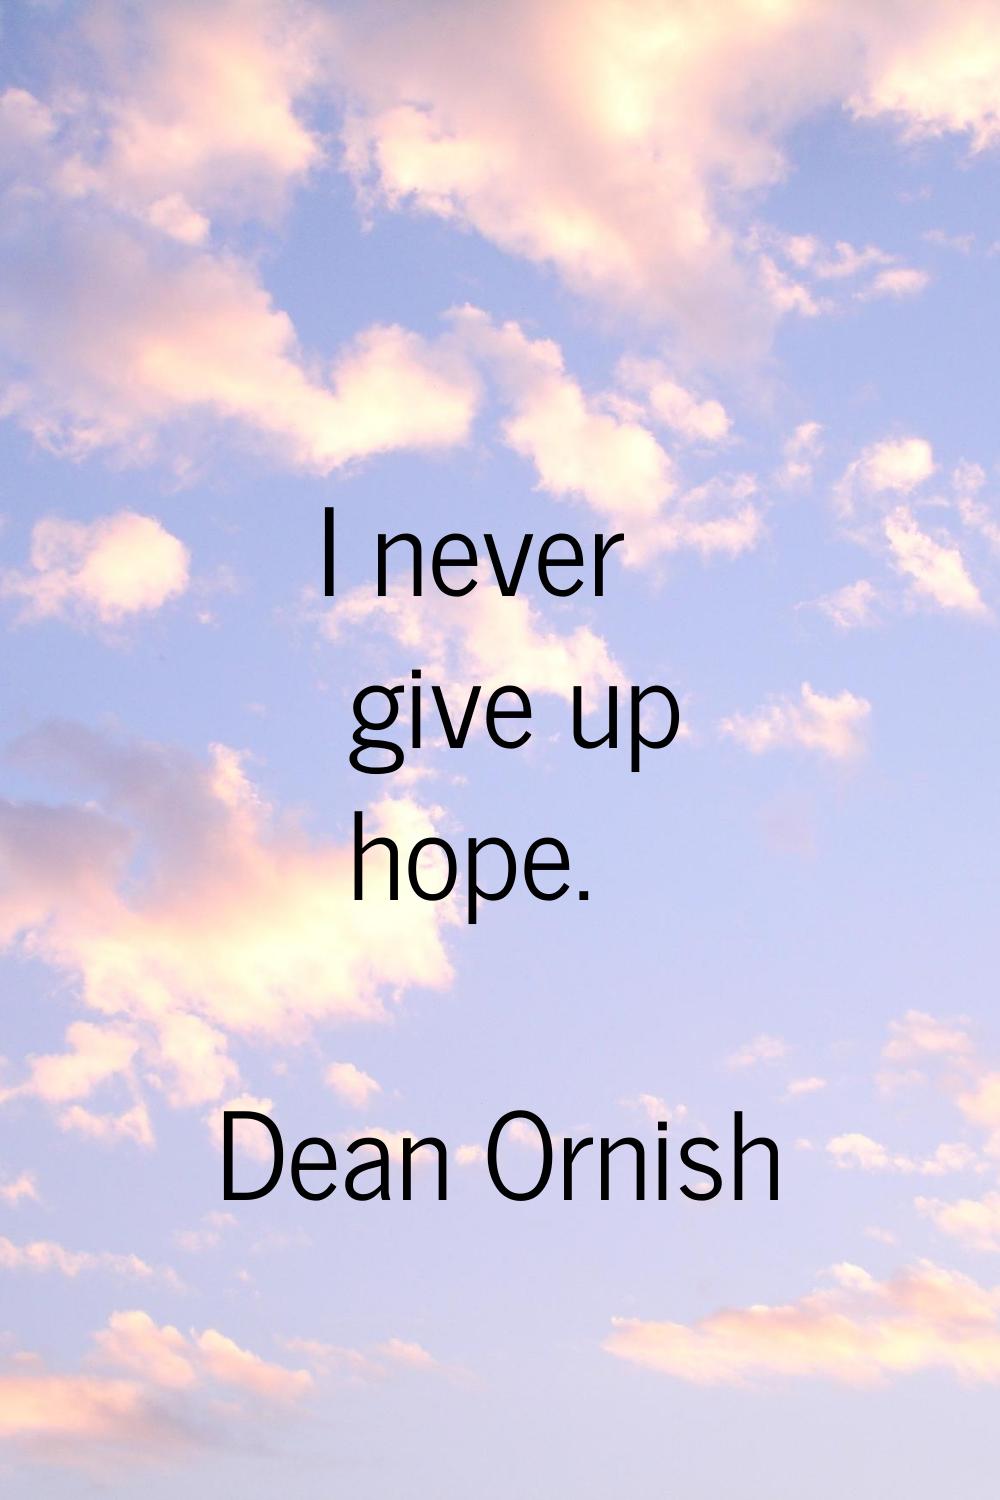 I never give up hope.